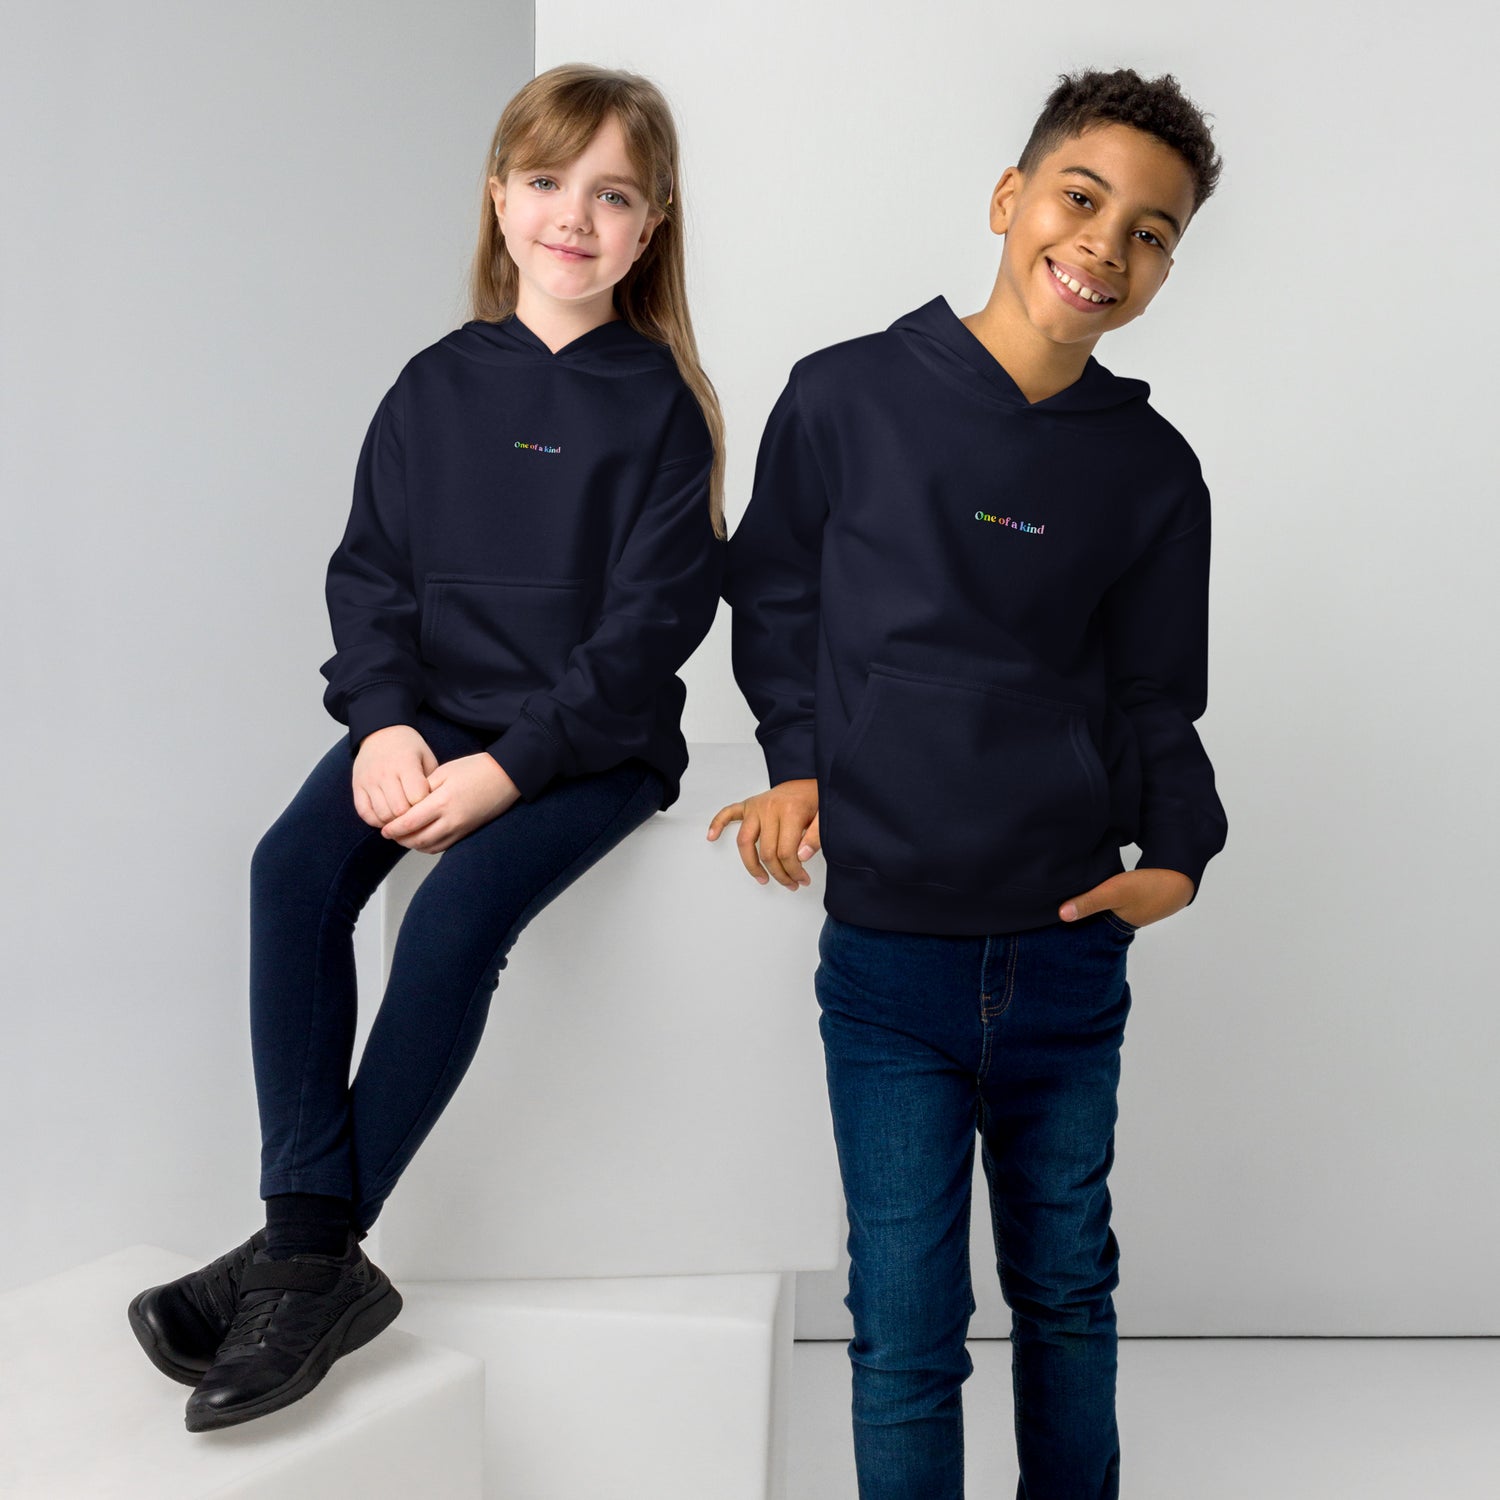 Indigo Kidswear hoodie featuring "One of a kind" design .